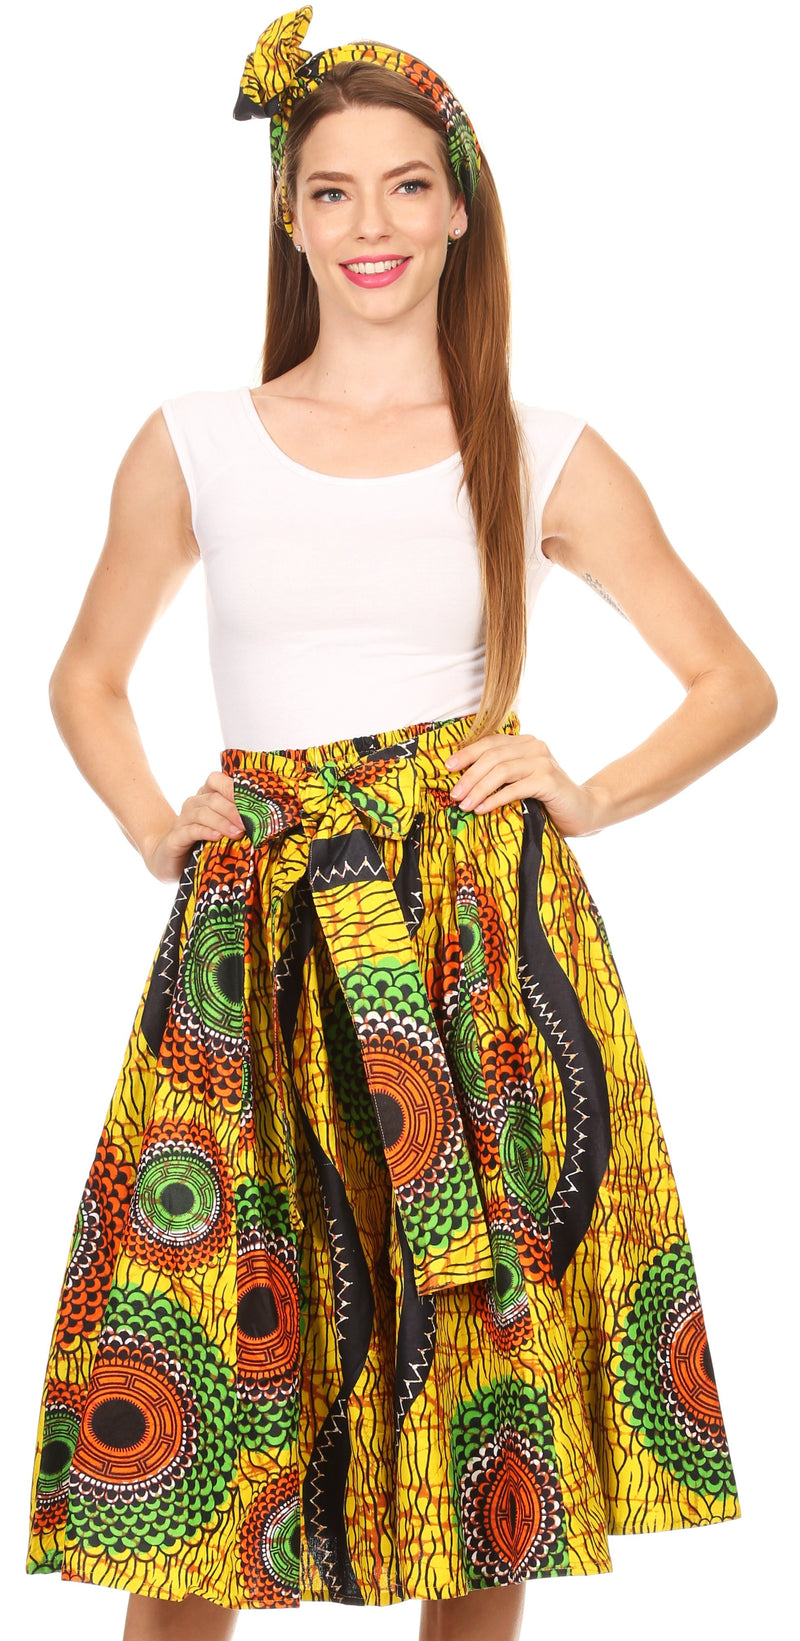 Sakkas Adisa Ankara African Wax Print Culotte Pants Colorful with Elastic Waist